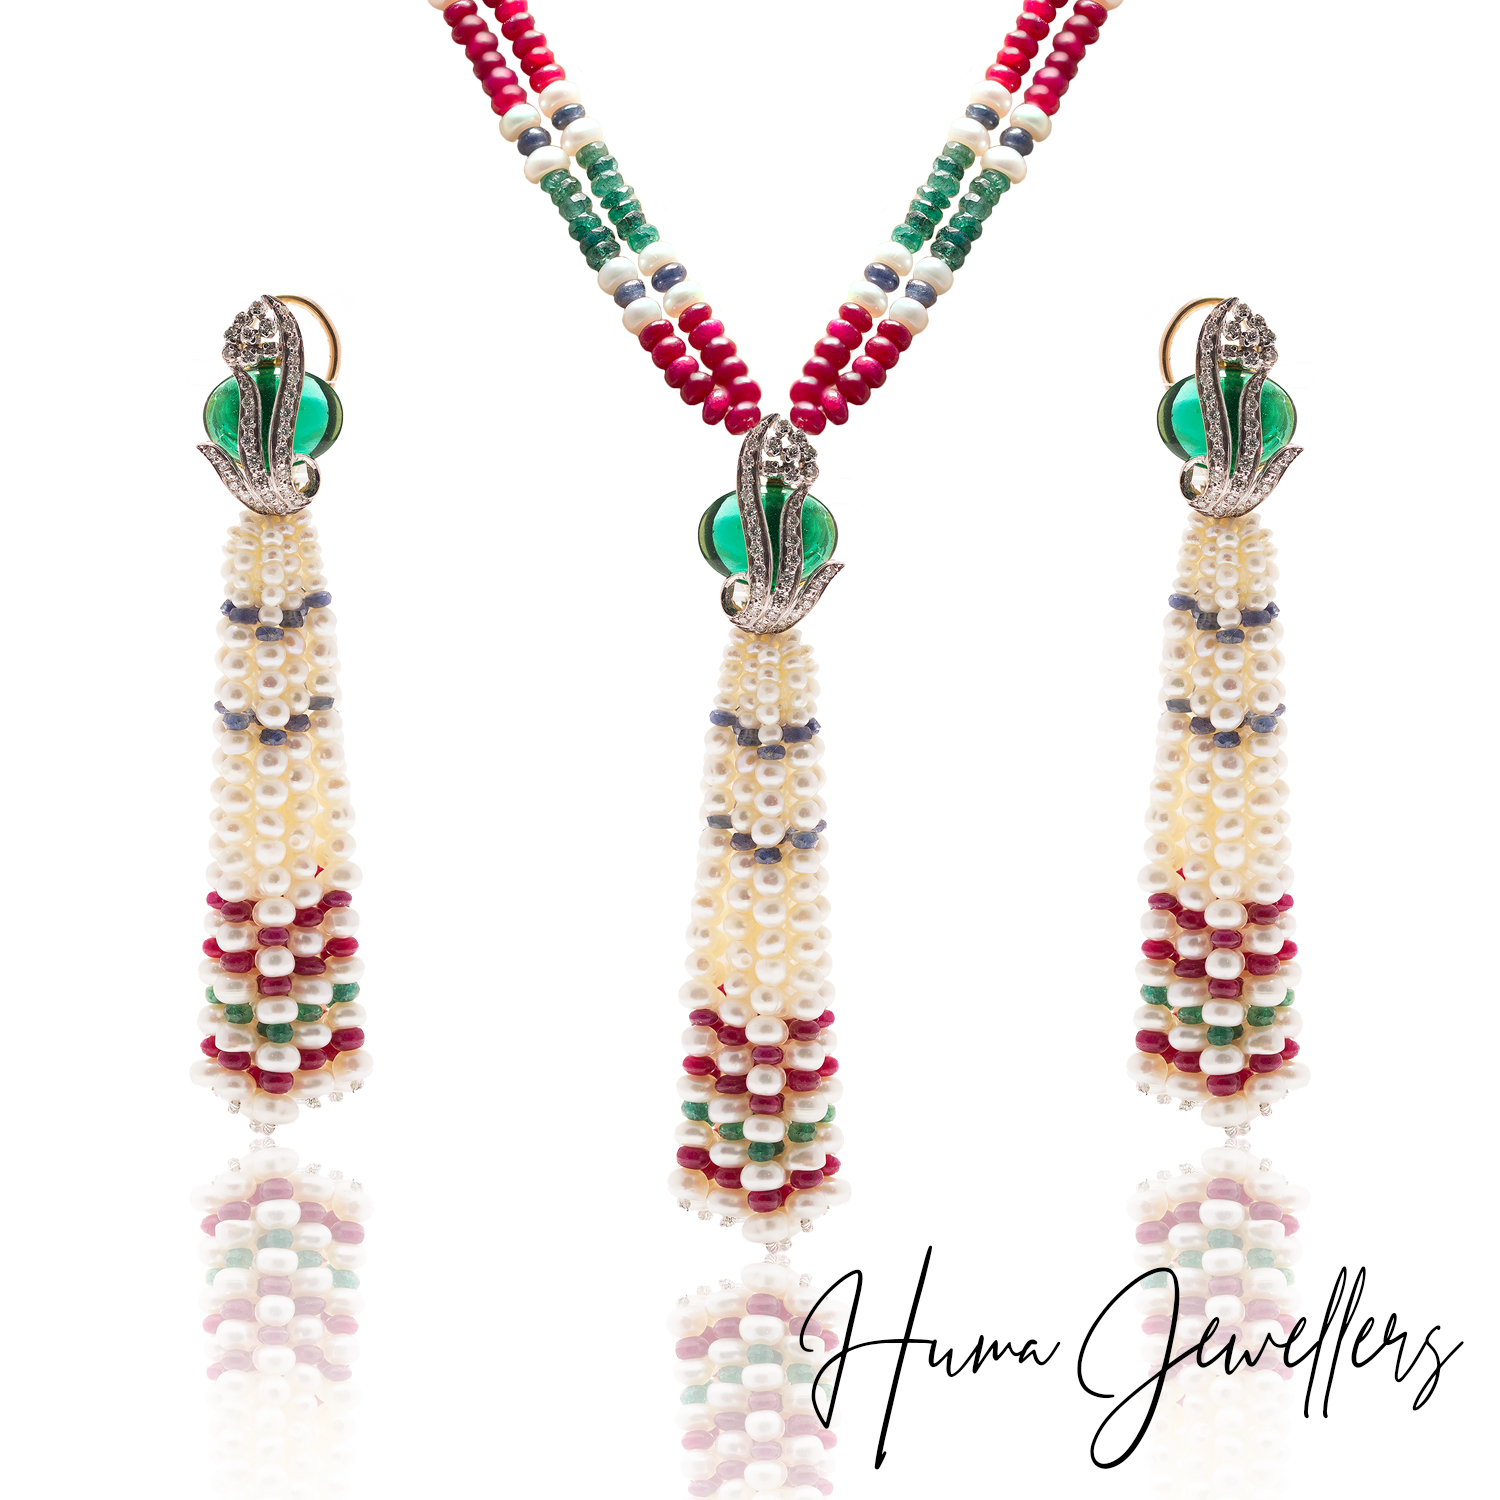 modern spirals dangling locket pendant necklace set with diamonds ruby emeralds natural pearls at huma jewellers jewelry karachi pakistan